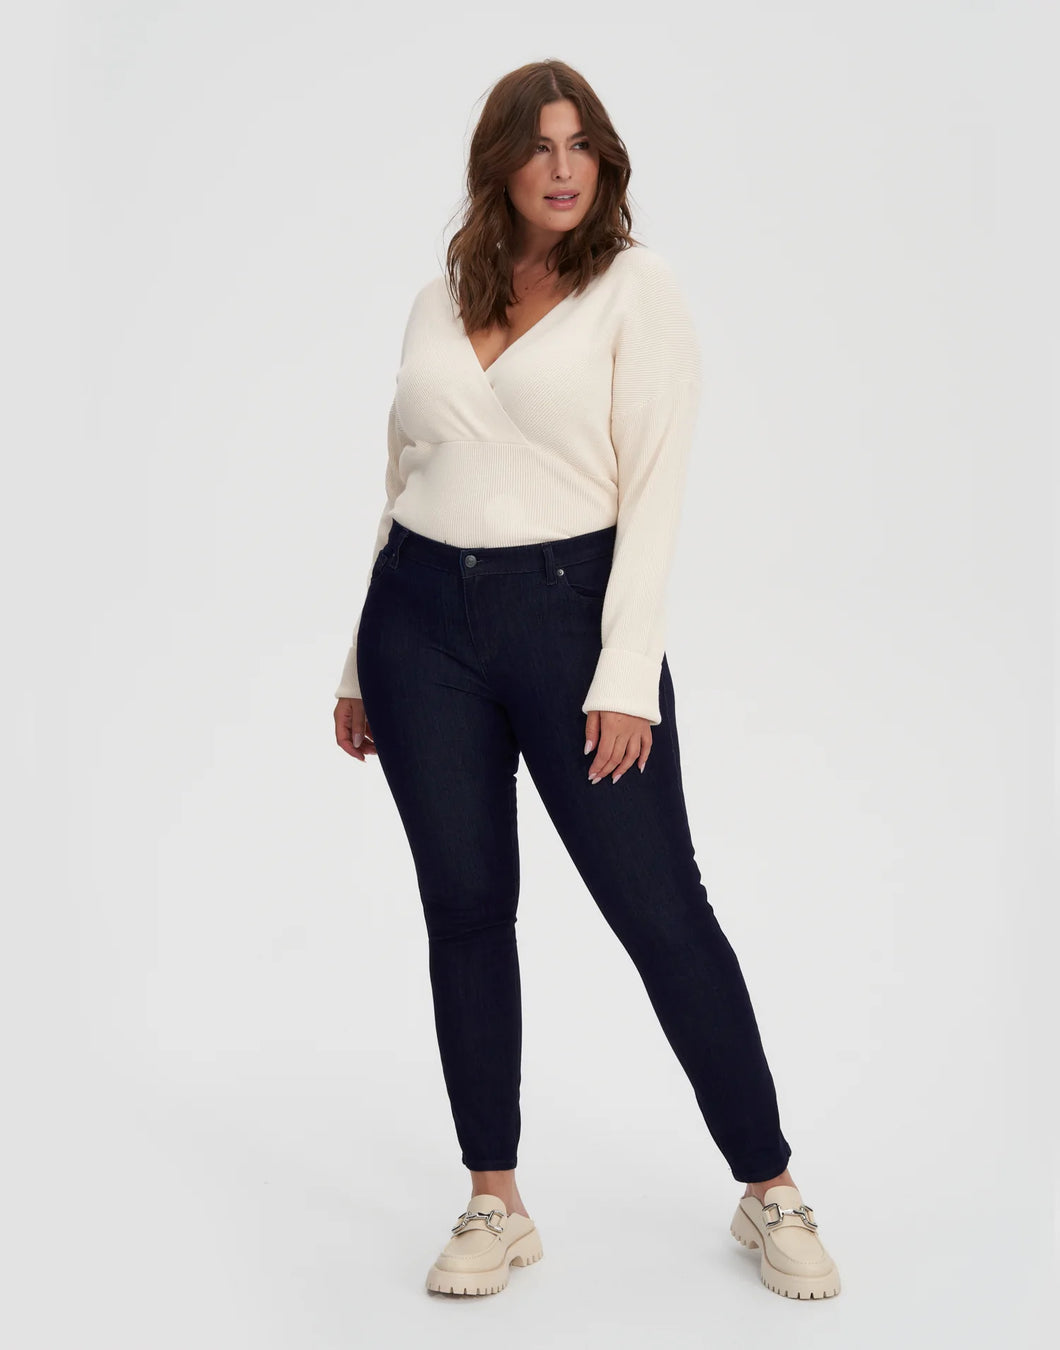 RACHEL - COUPE ÉTROITE - Taille moyenne- PRAGUE - Entrejambe 30''- Yoga Jeans